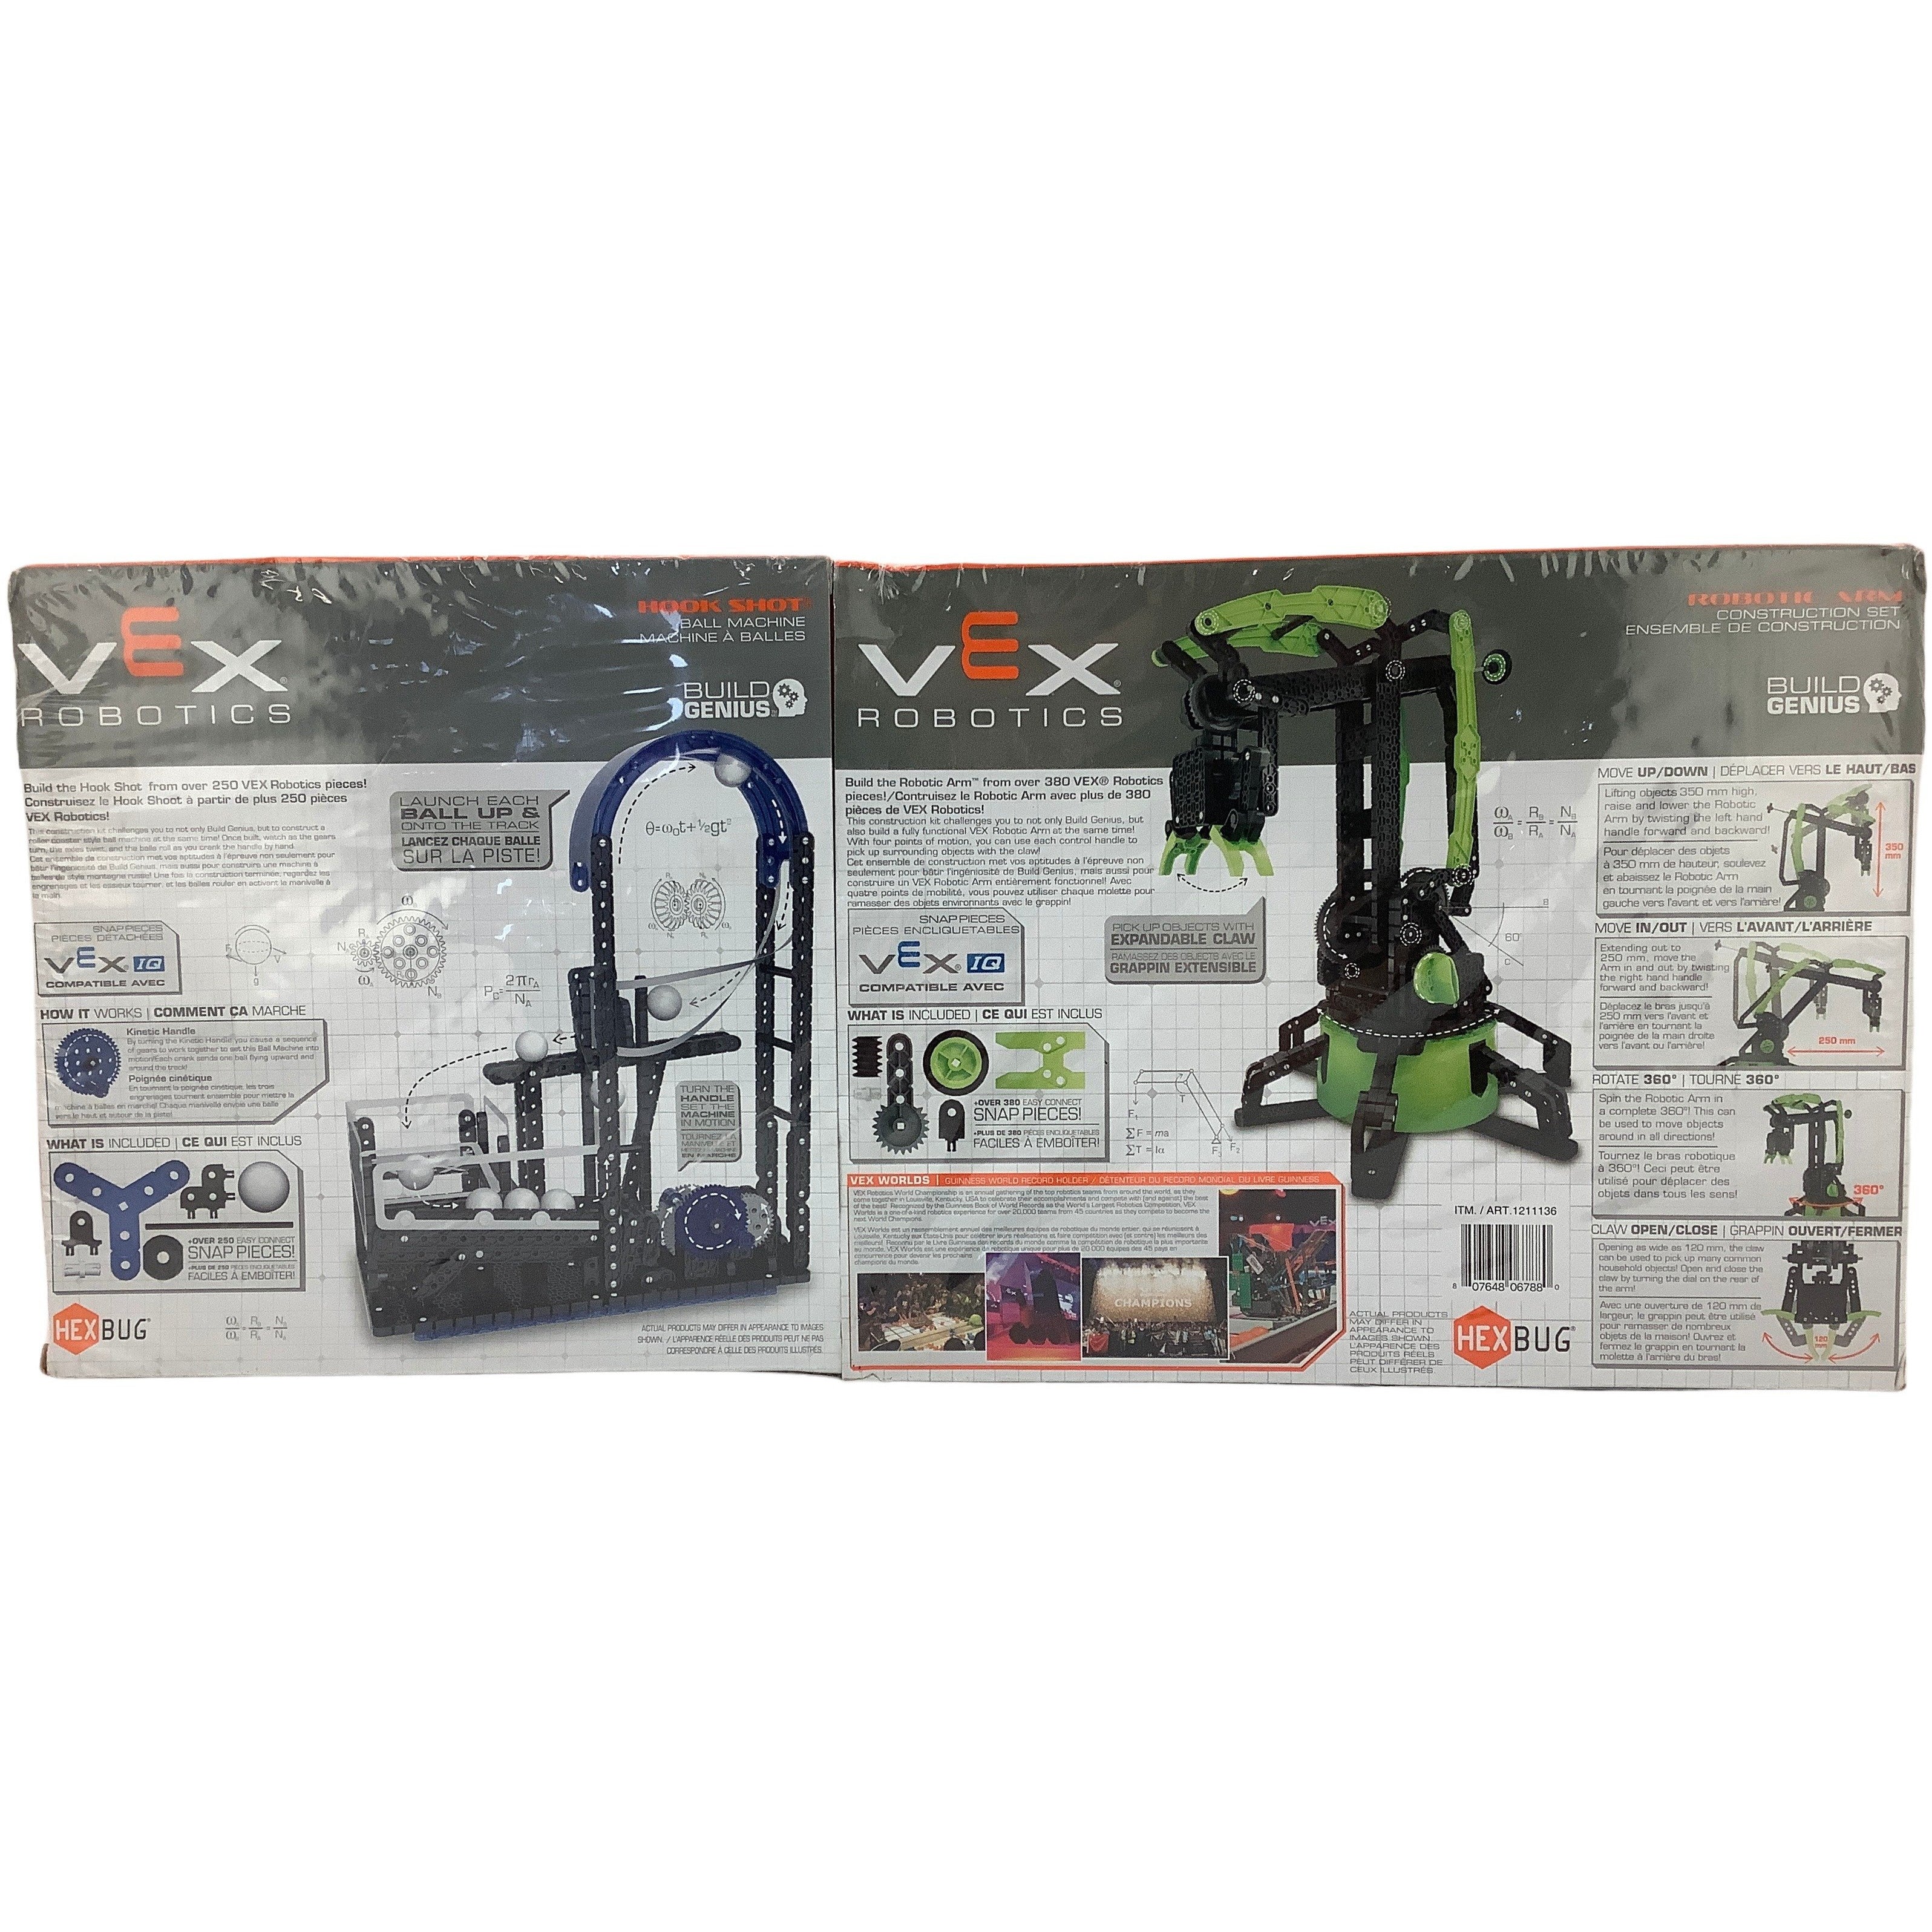 HexBug Vex Robotics 2 Pack: Robotic Arm and Hook Shot: Construction Kit **DEALS**